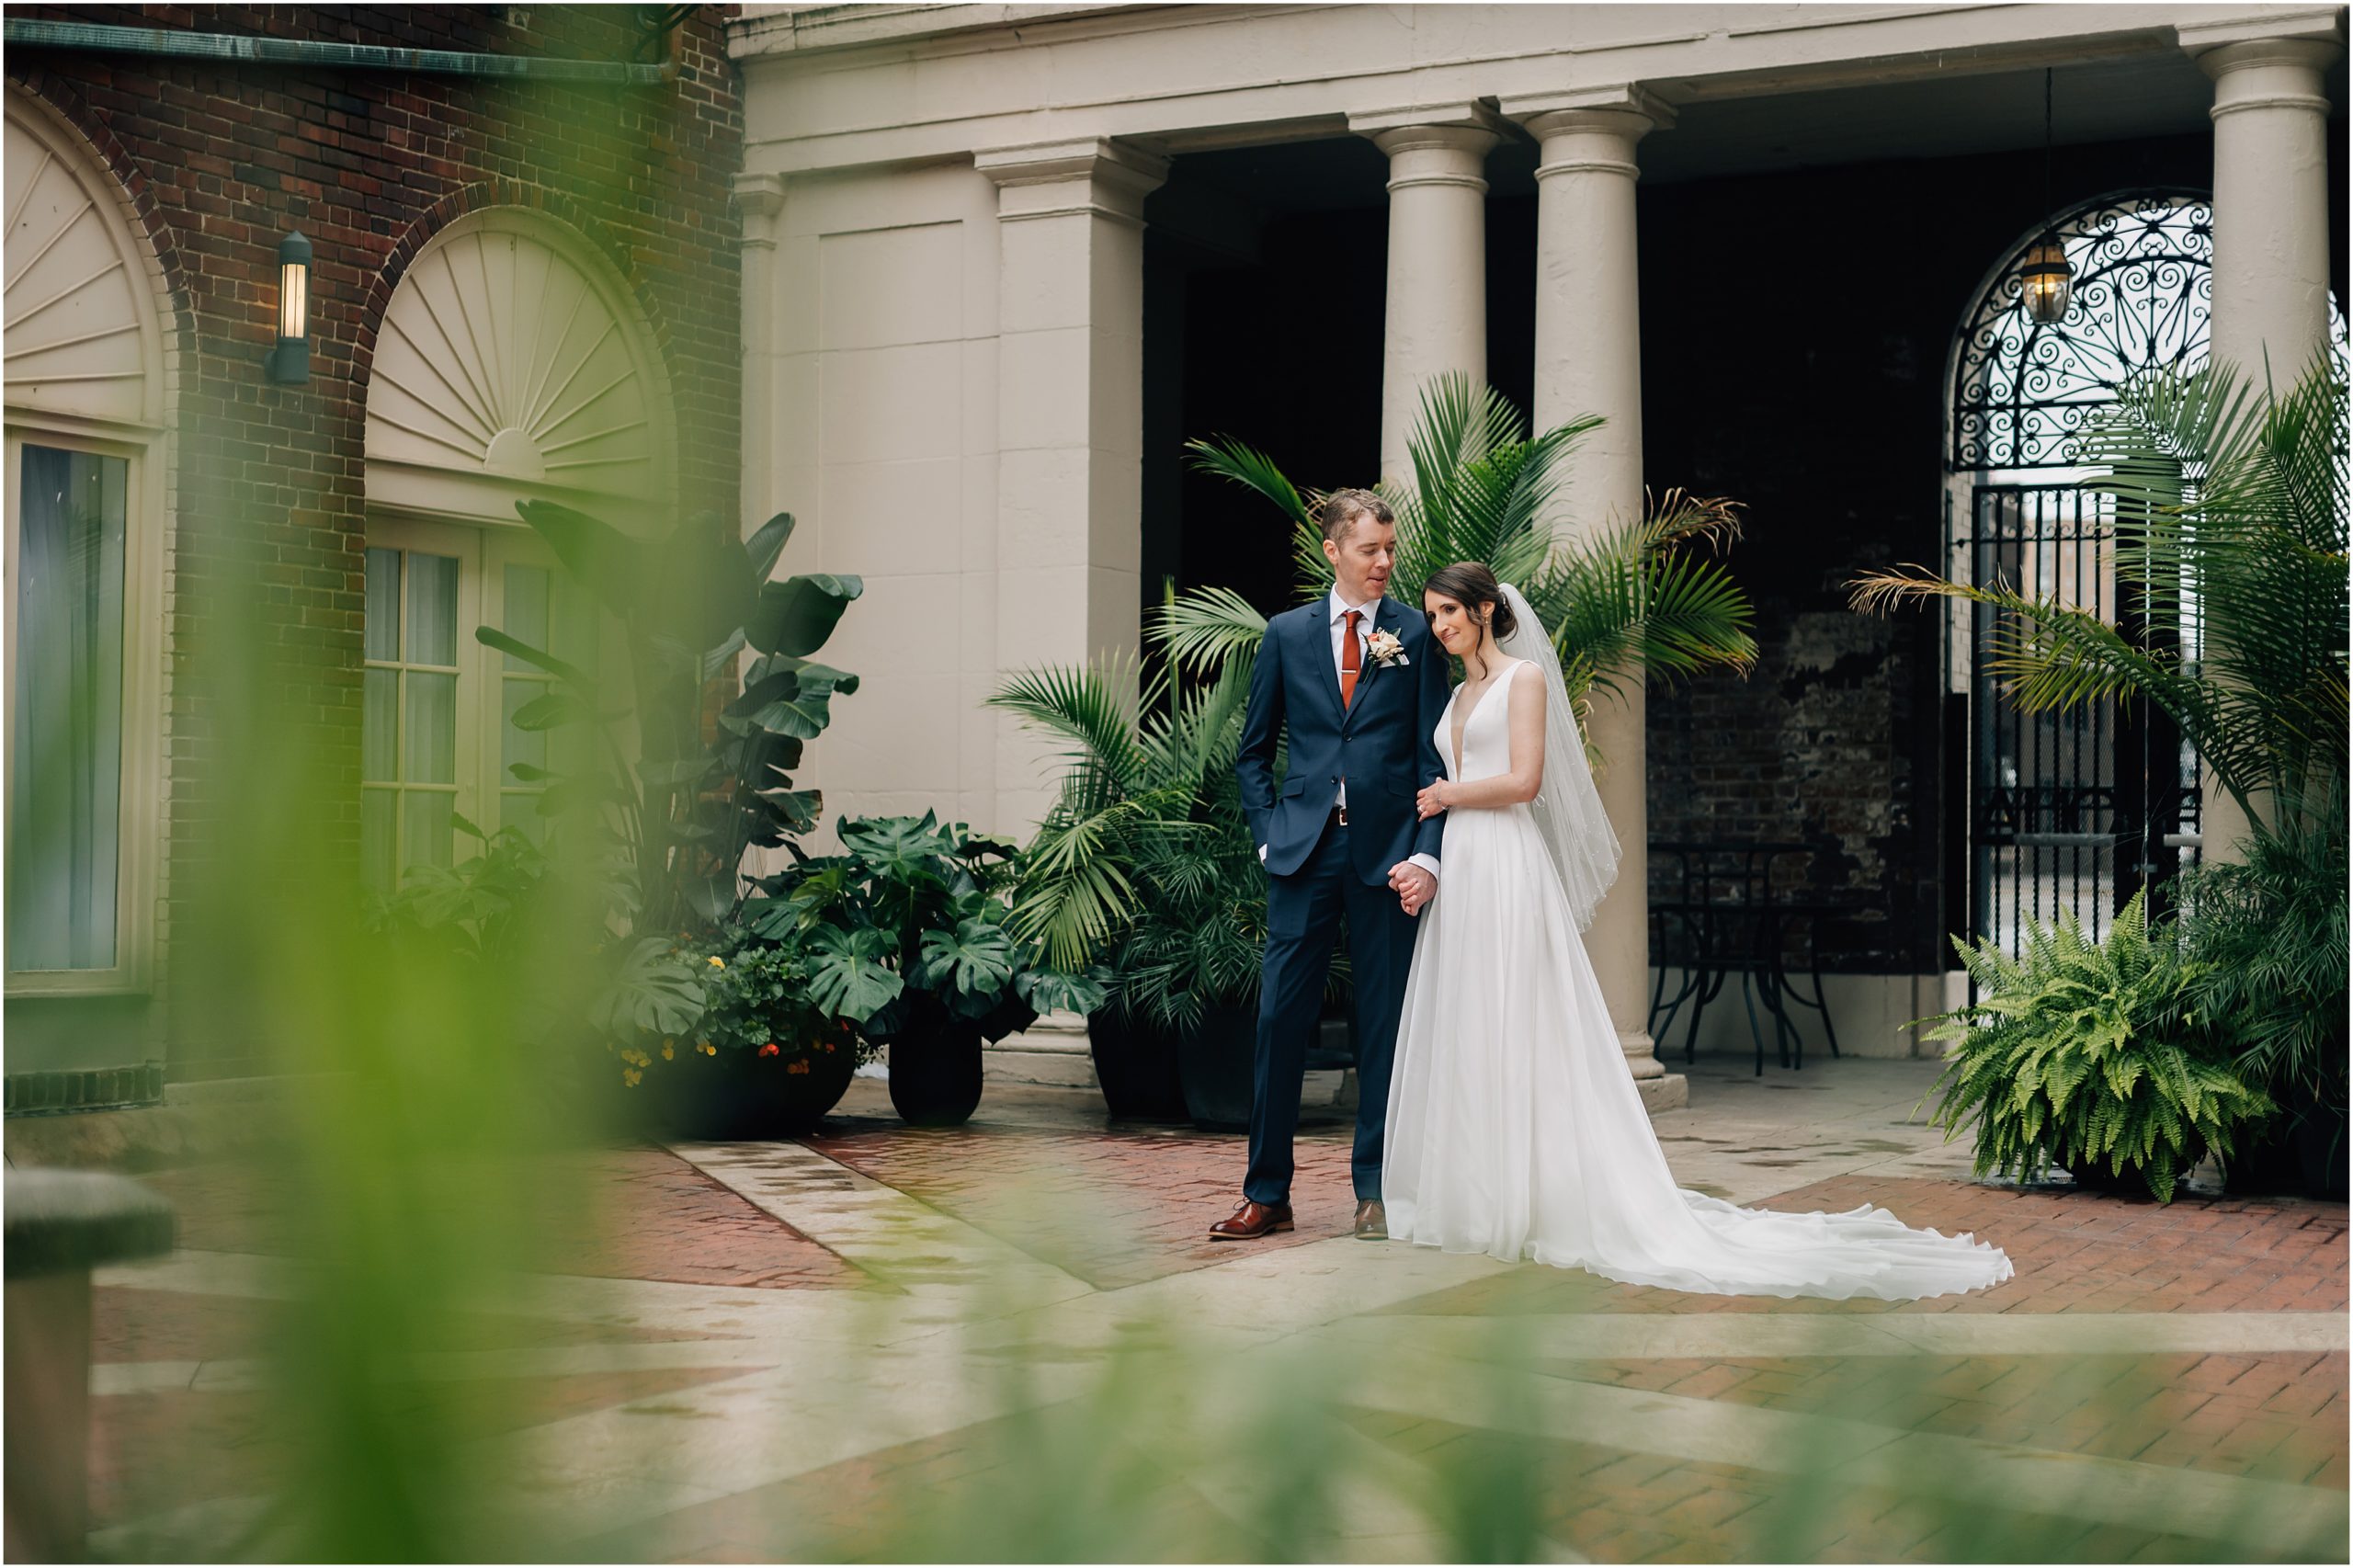 Bride and Groom hold hands in the courtyard at Magnolia Hotel, a wedding venue in Omaha, NE. Photo by Anna Brace, an Omaha Nebraska Wedding Photographer.

